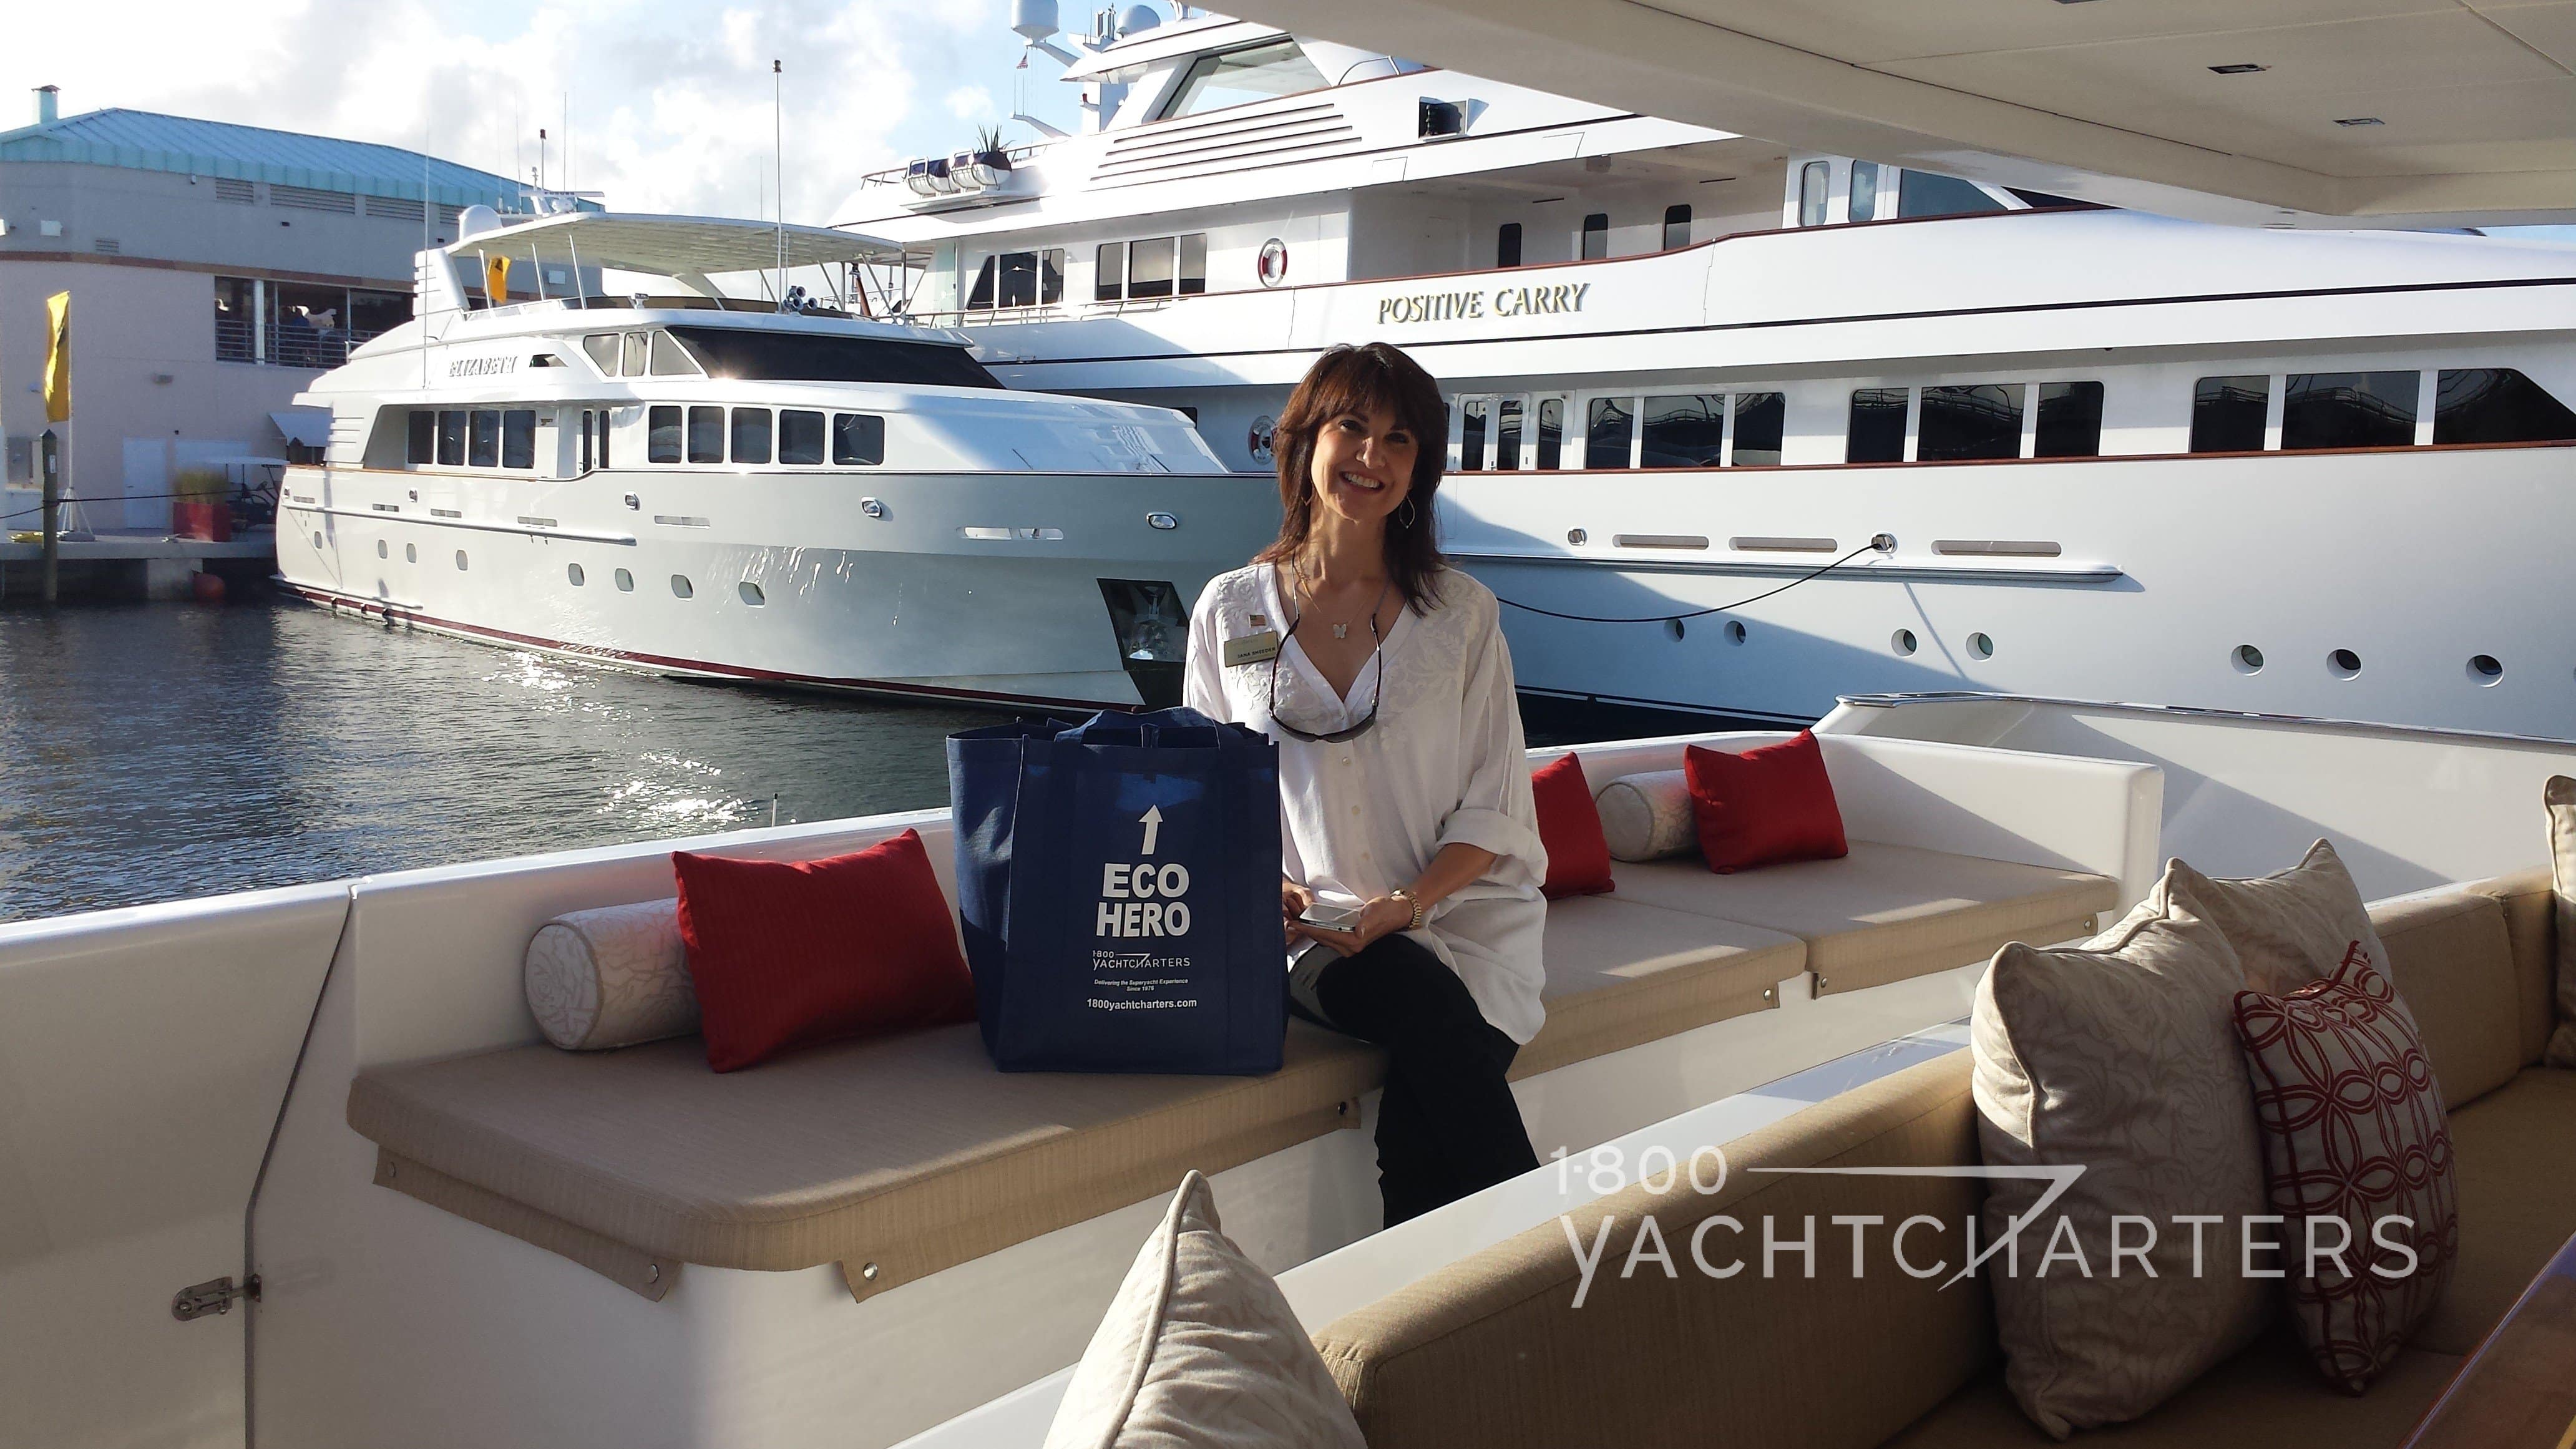 Photograph of Jana Sheeder sitting on a luxury yacht